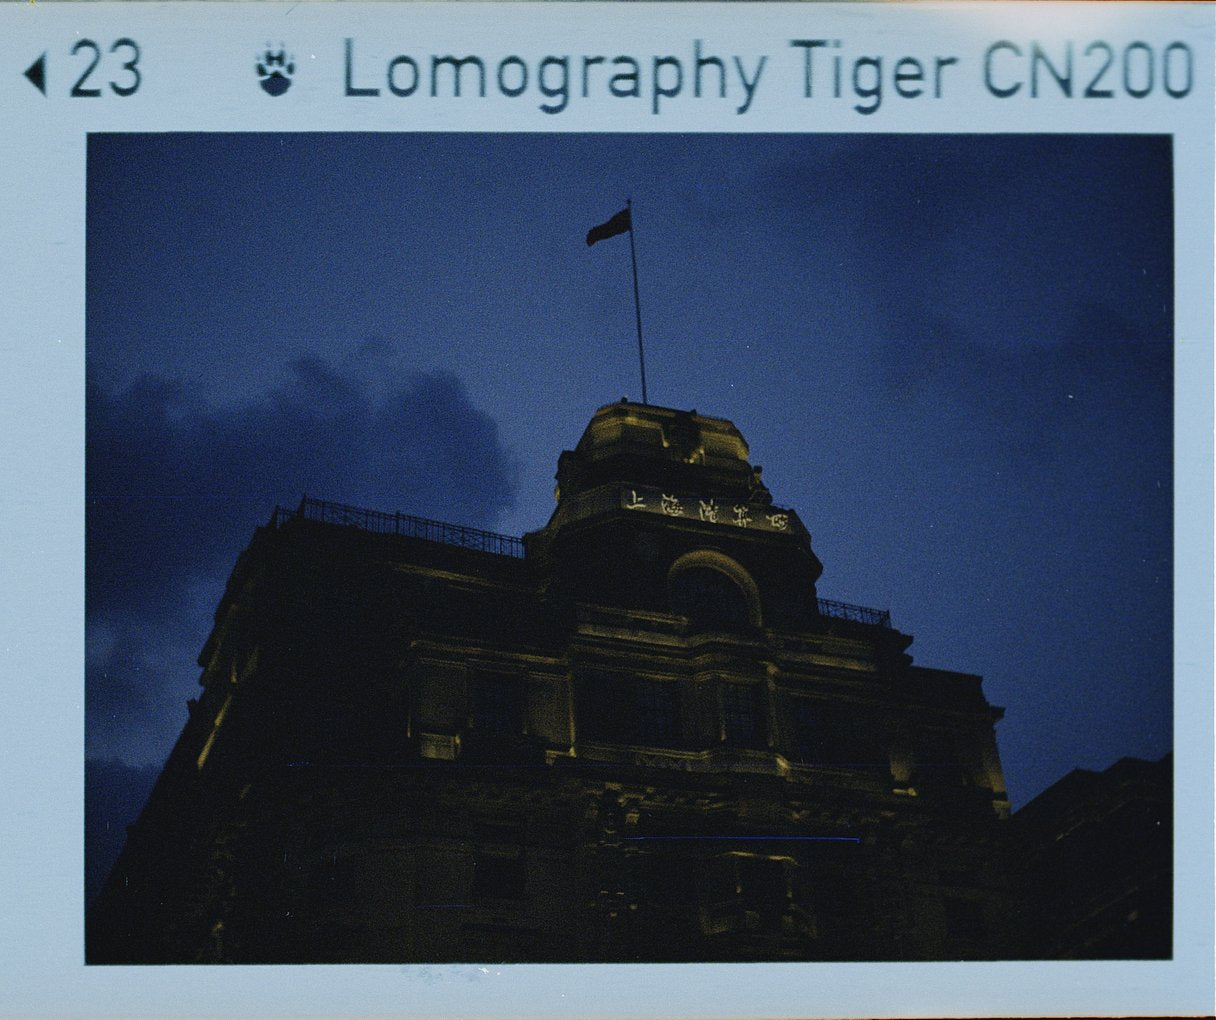 Holga Micro 110 Film Camera + Lomography Tiger 200 110 Film Set